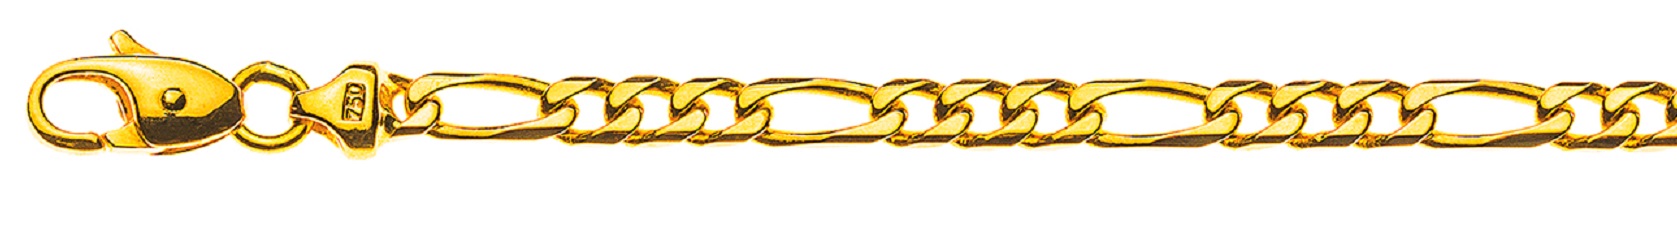 AURONOS Style Collier Figaro en or jaune 9K 50cm 4mm